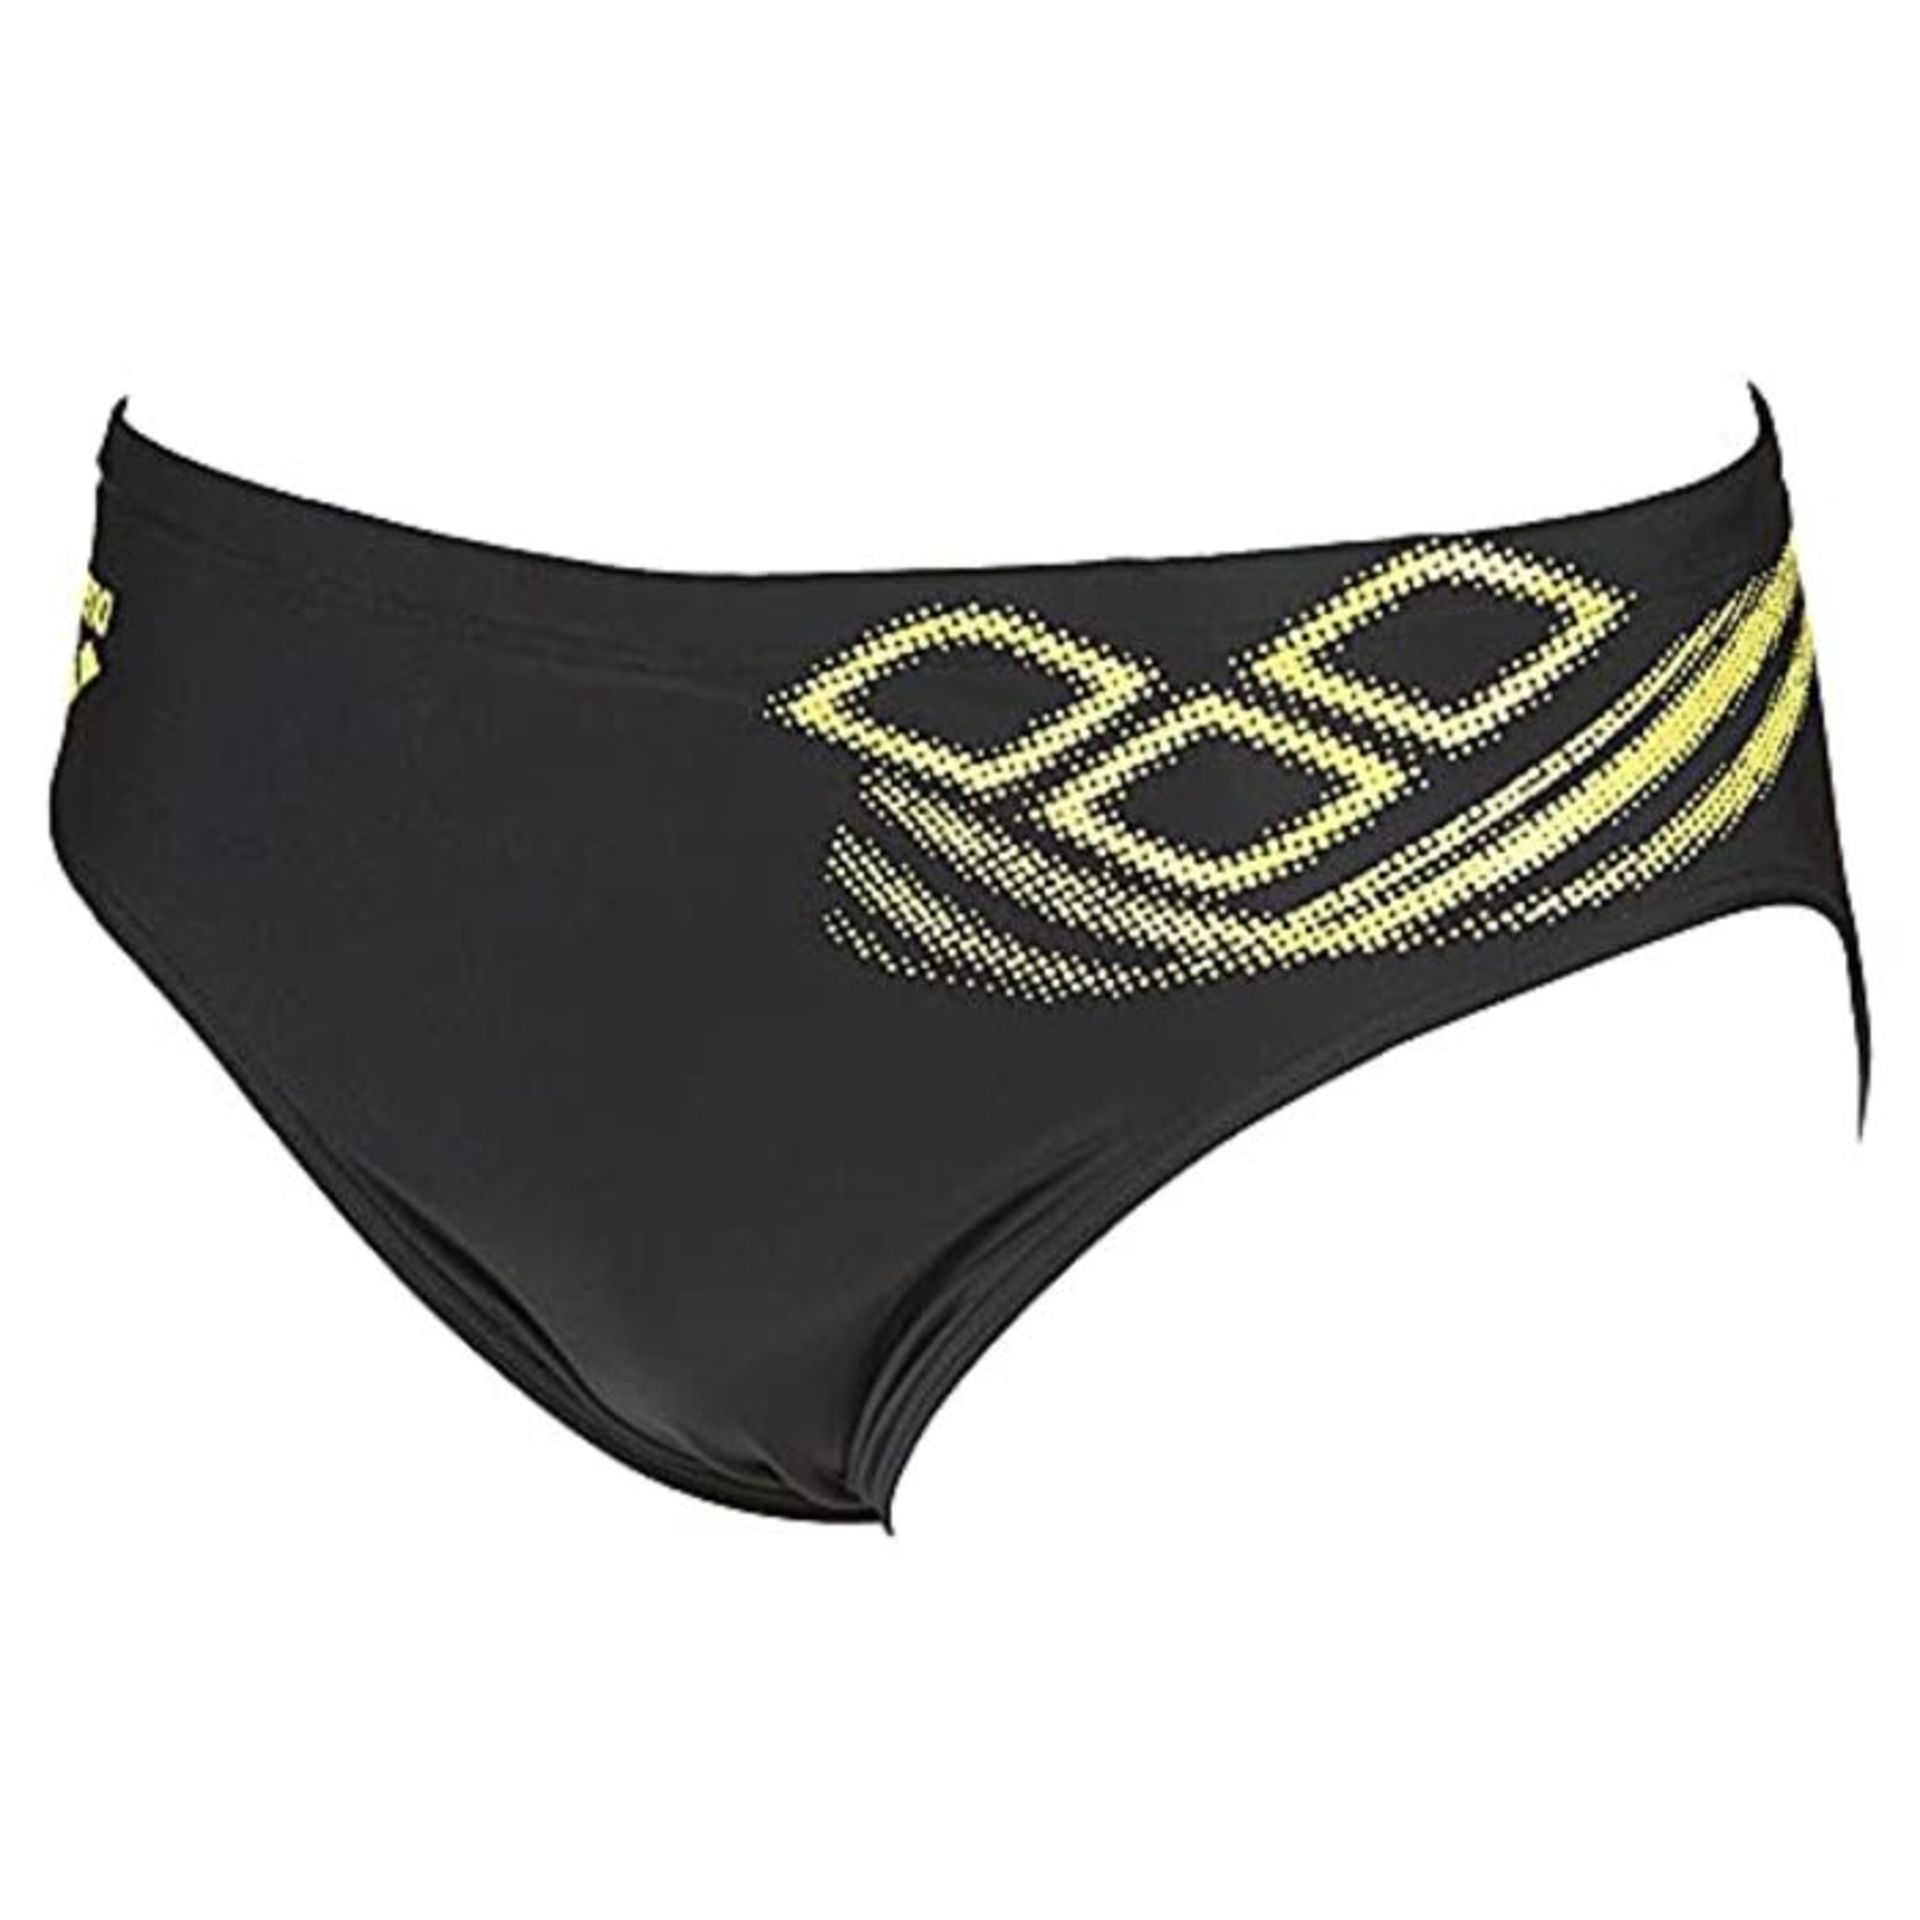 Arena M Spirit Brief - Men's Swimming Trunks, Black/Soft Green, Size 85, 30